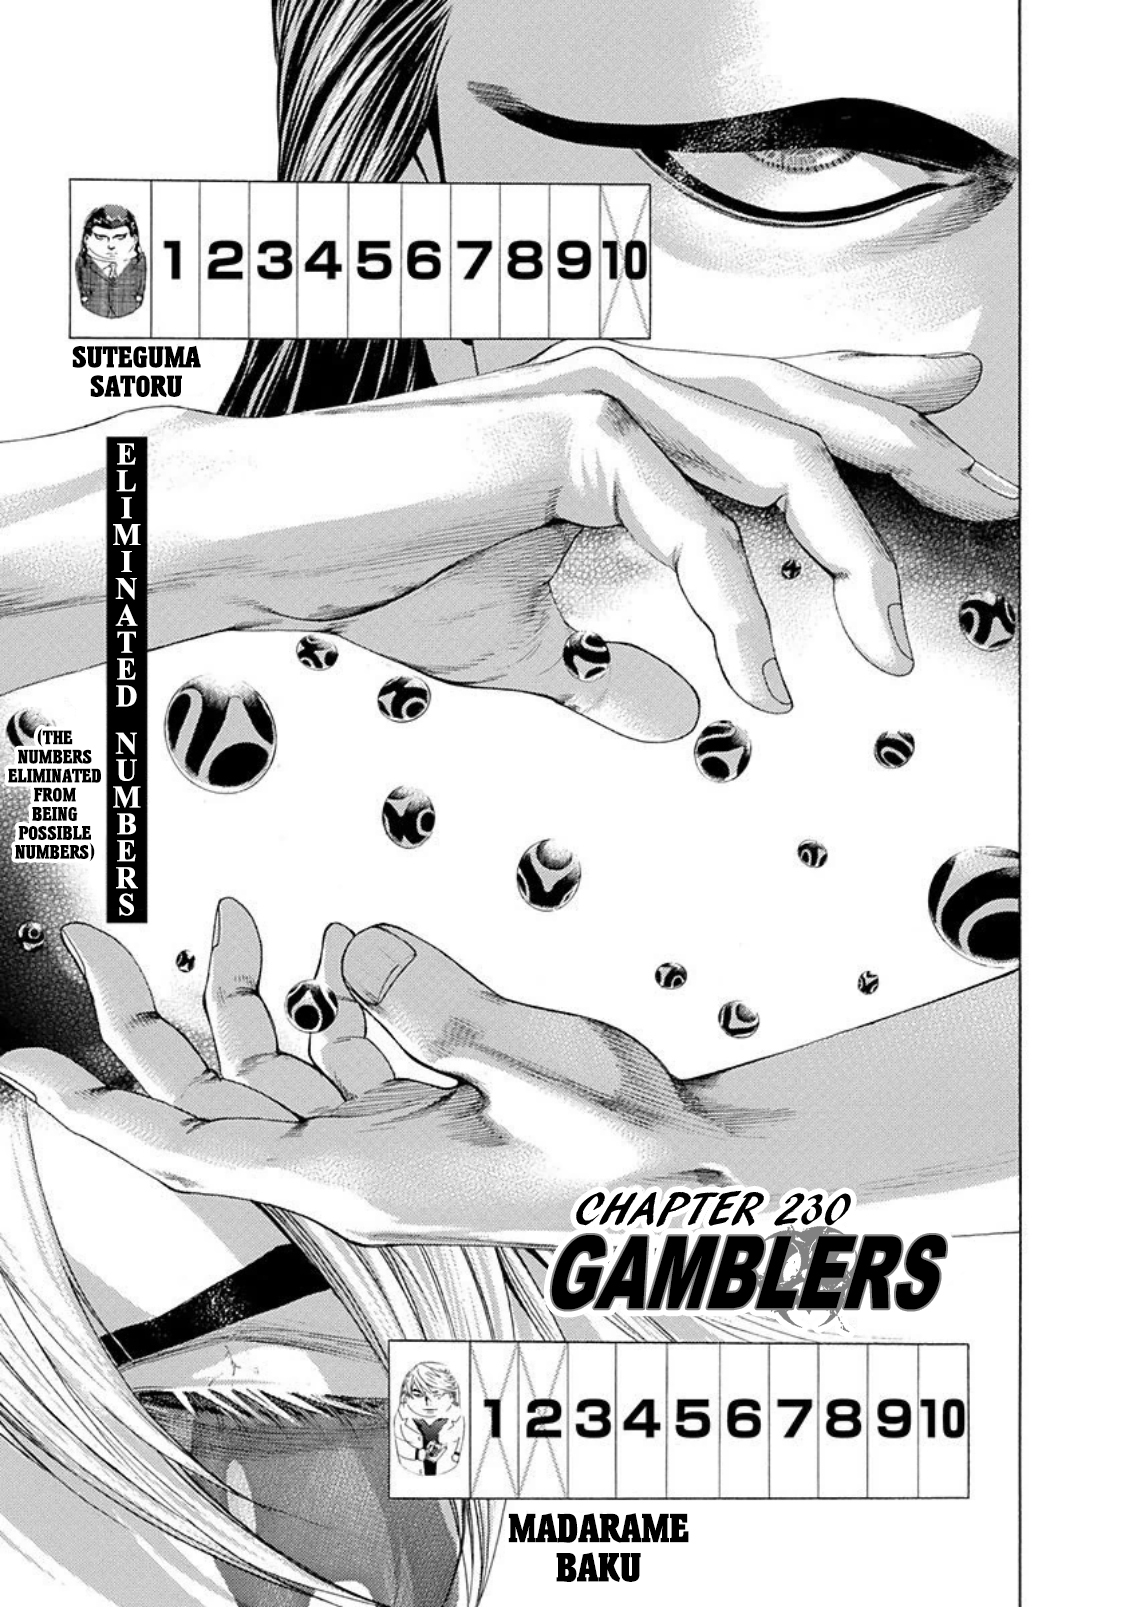 Usogui Vol. 21 Ch. 230 Gamblers